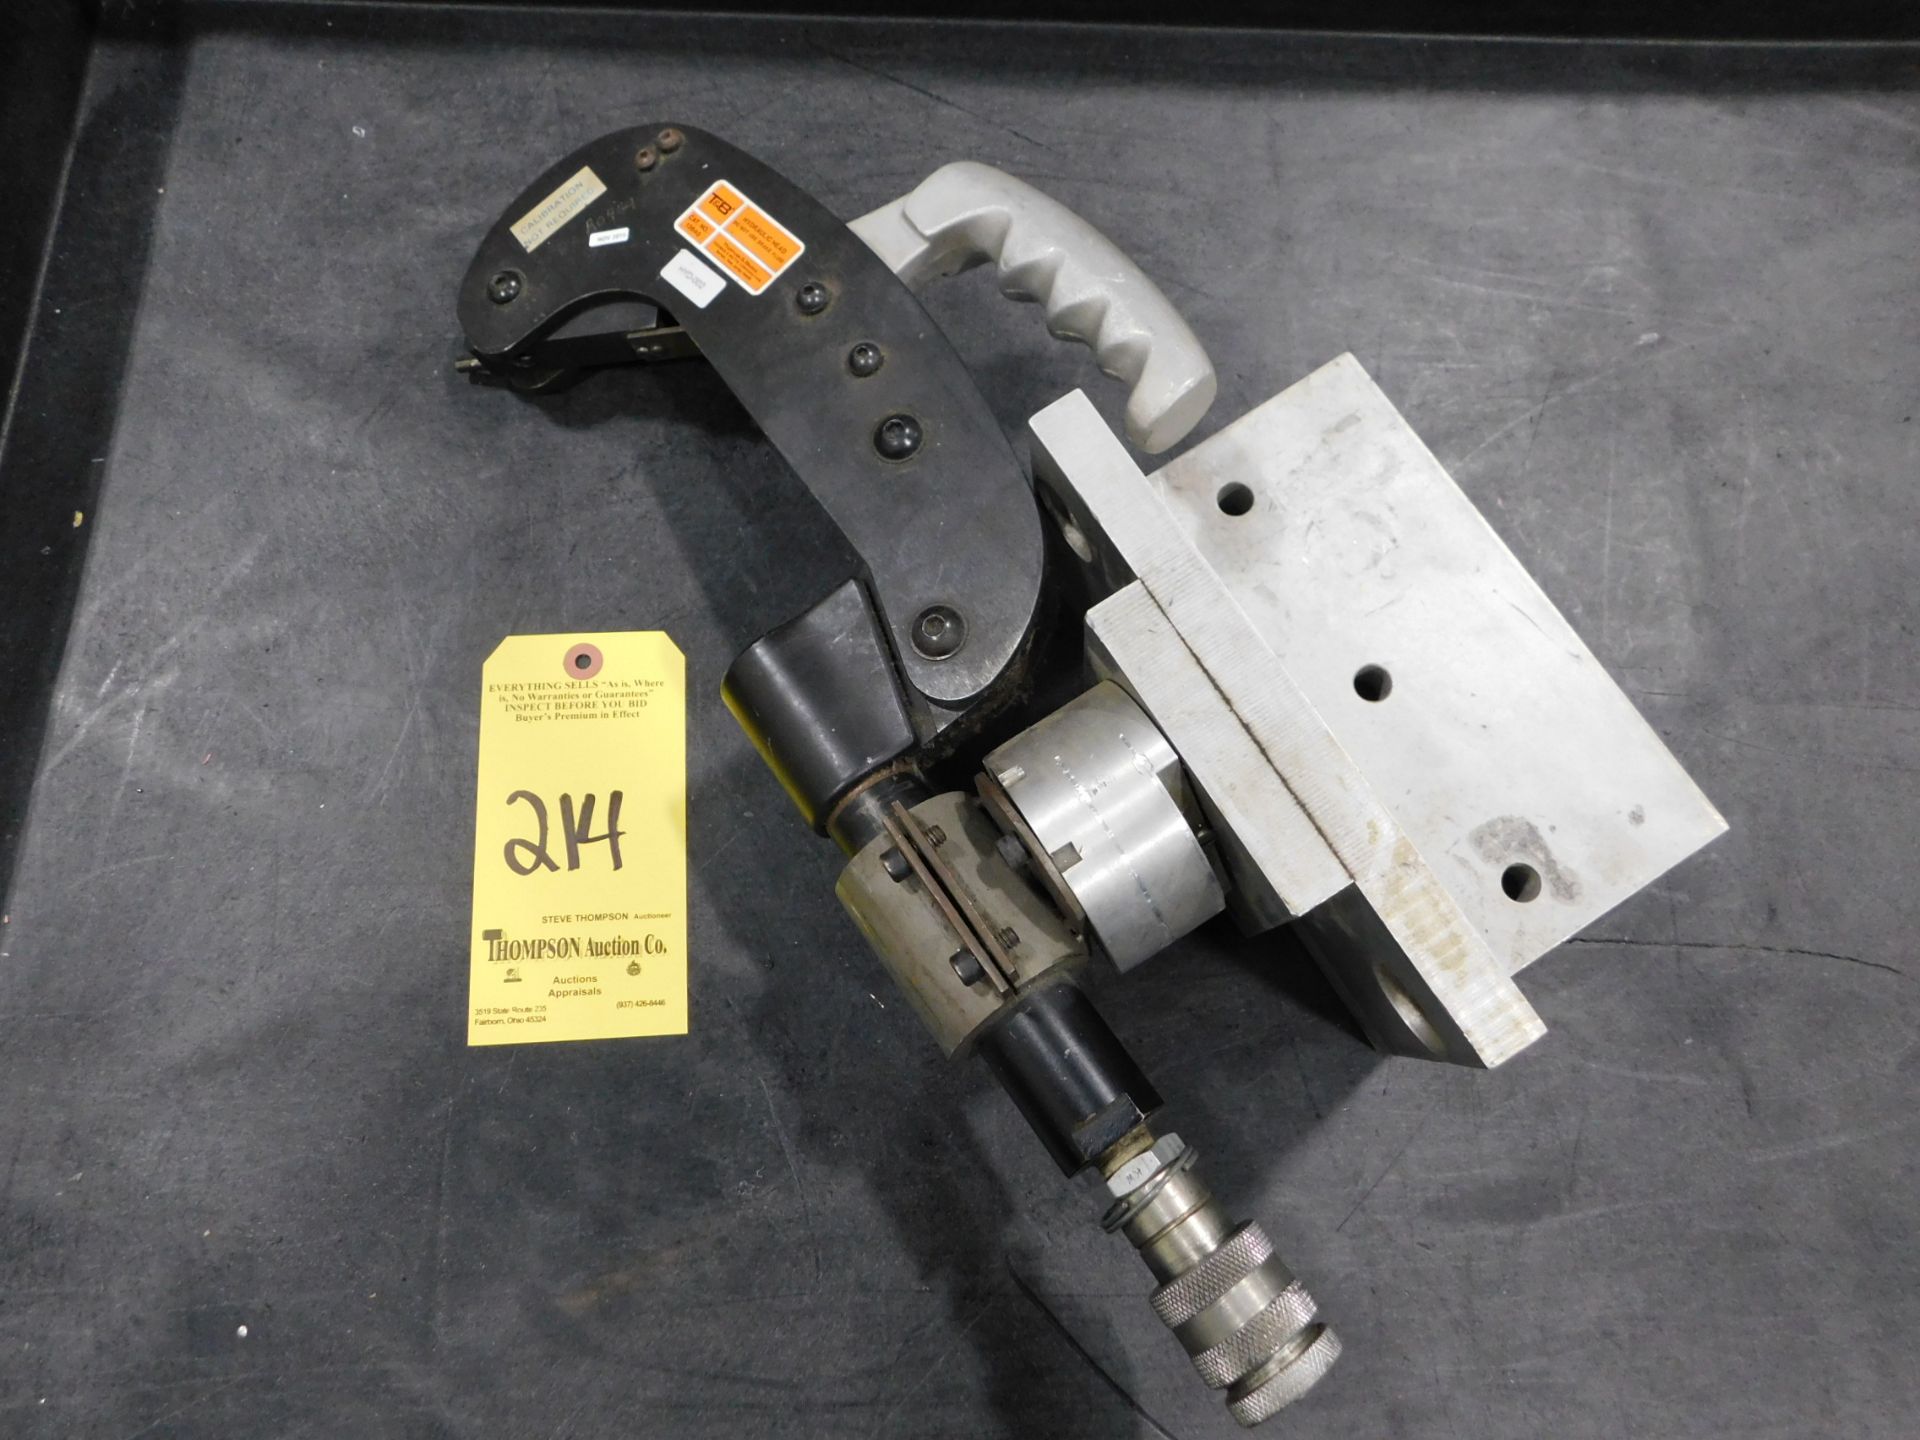 T&B Hydraulic Crimp Tool, Model 13640